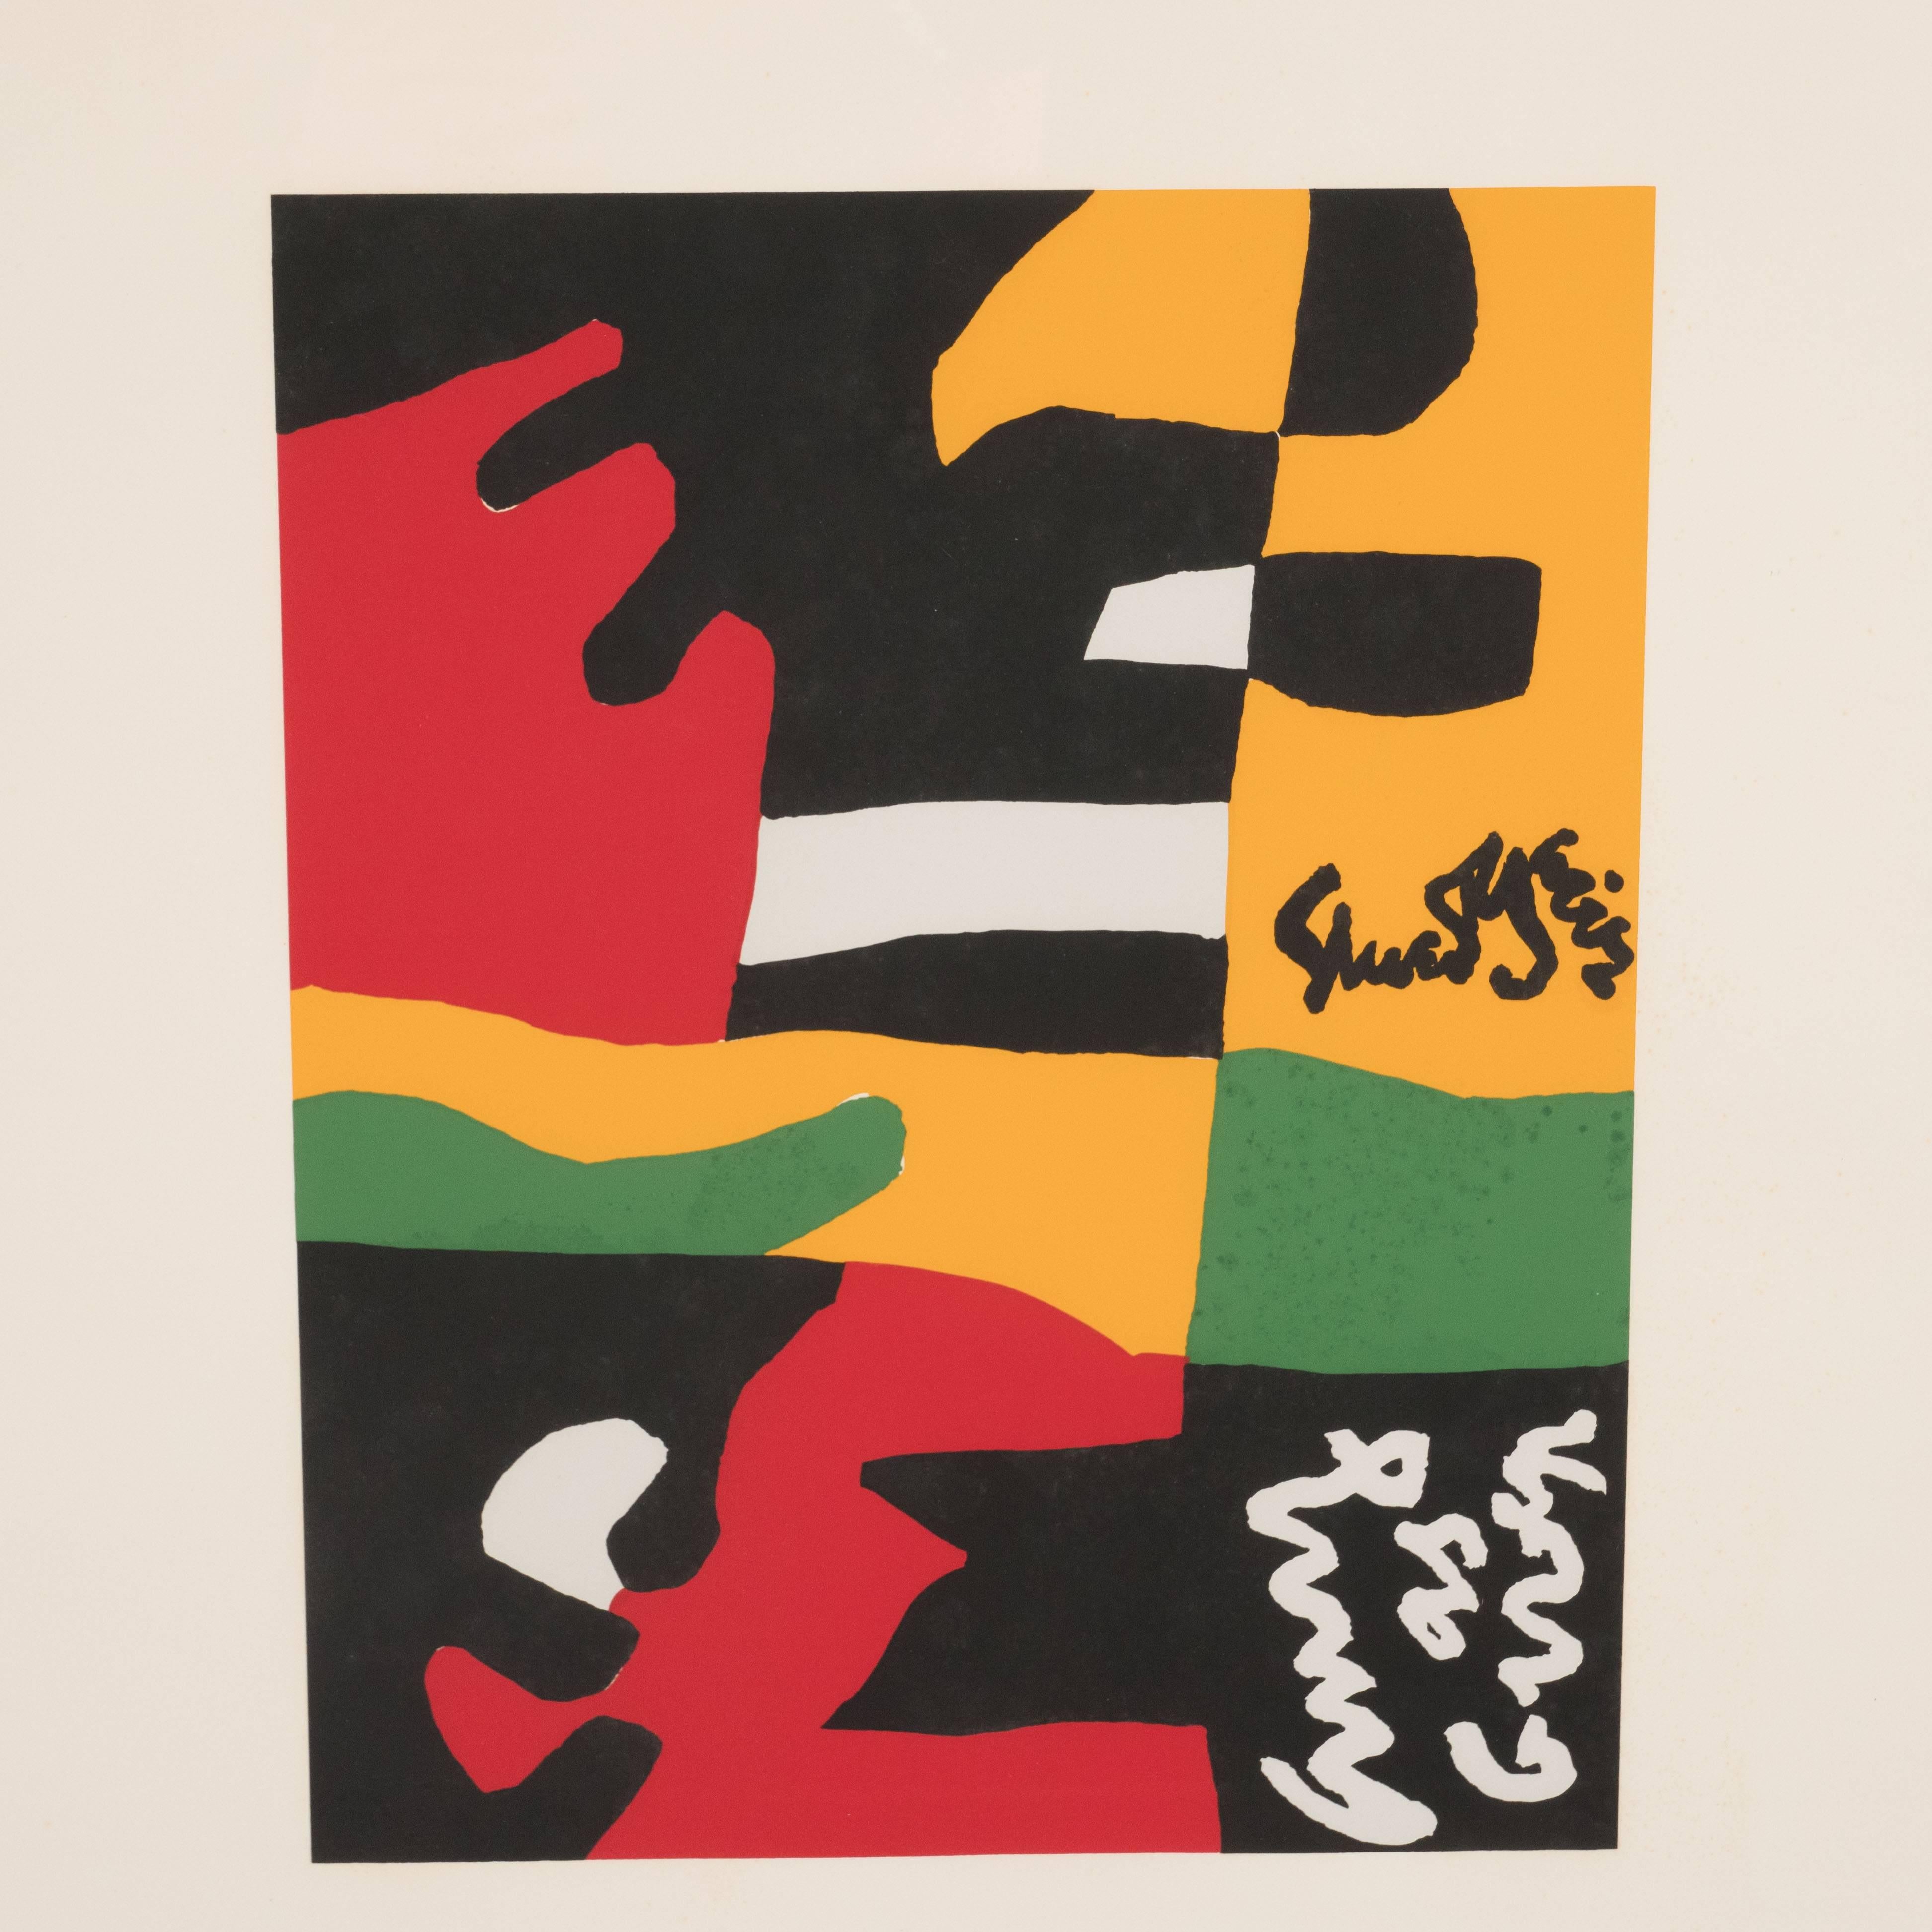 Composition by Stuart Davis
screen-print in colors, Circa 1965 
24.5